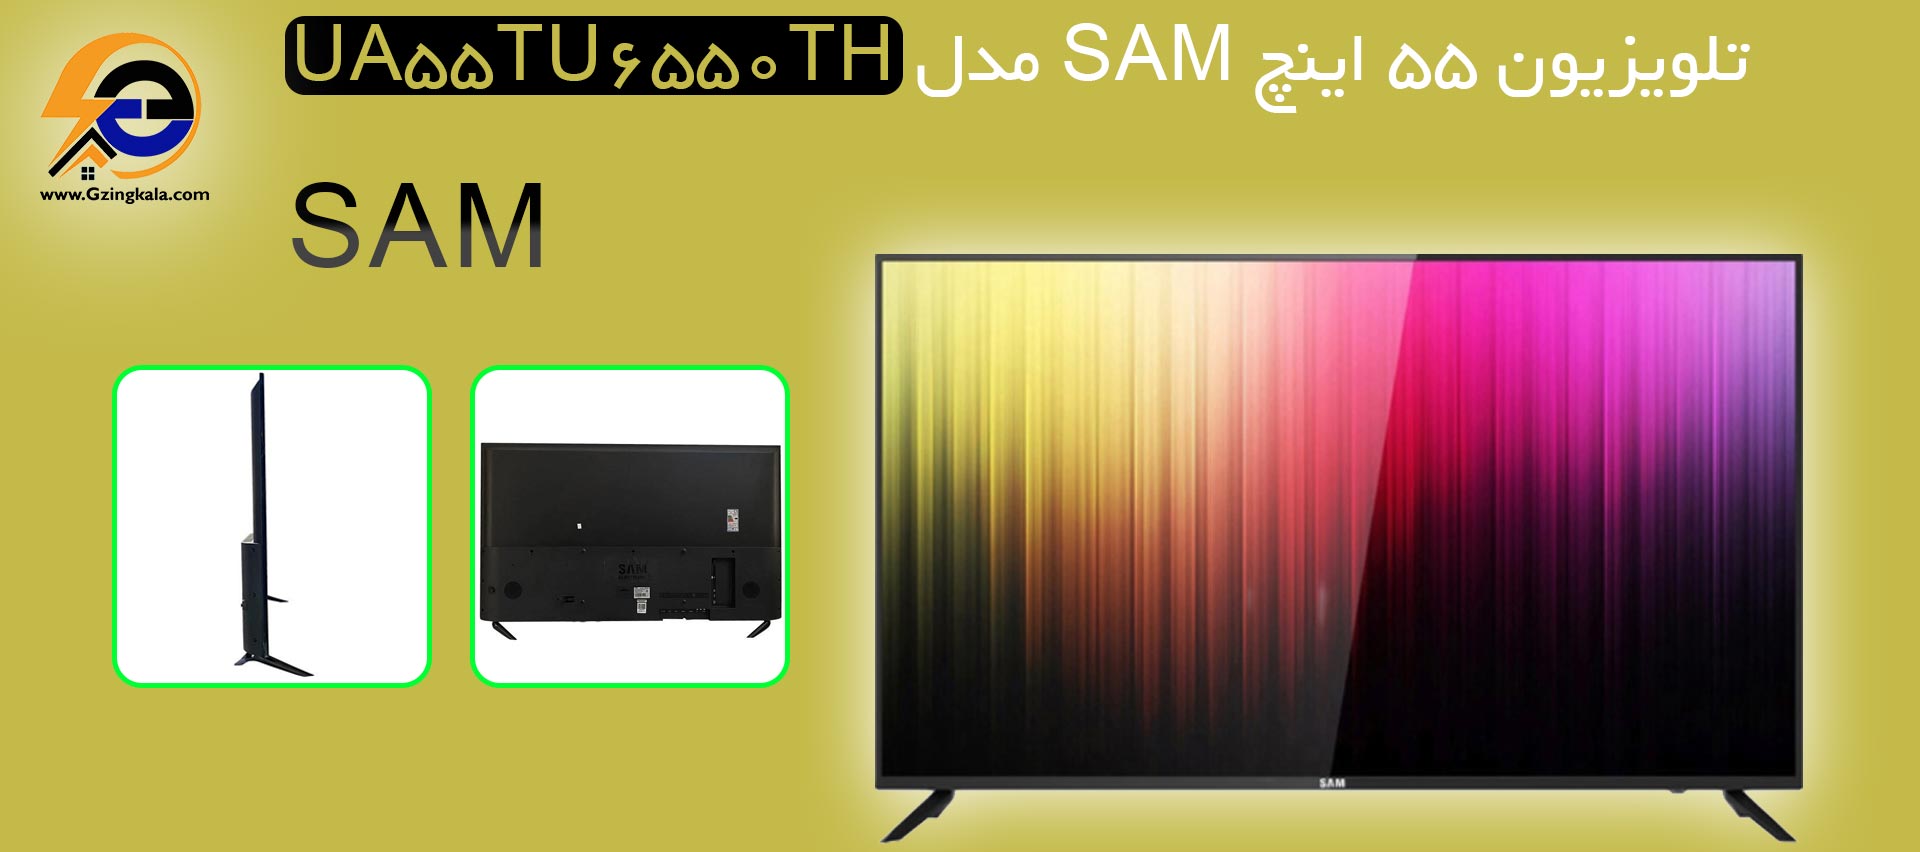 تلویزیون 55 اینچ SAM مدل UA55TU6550TH